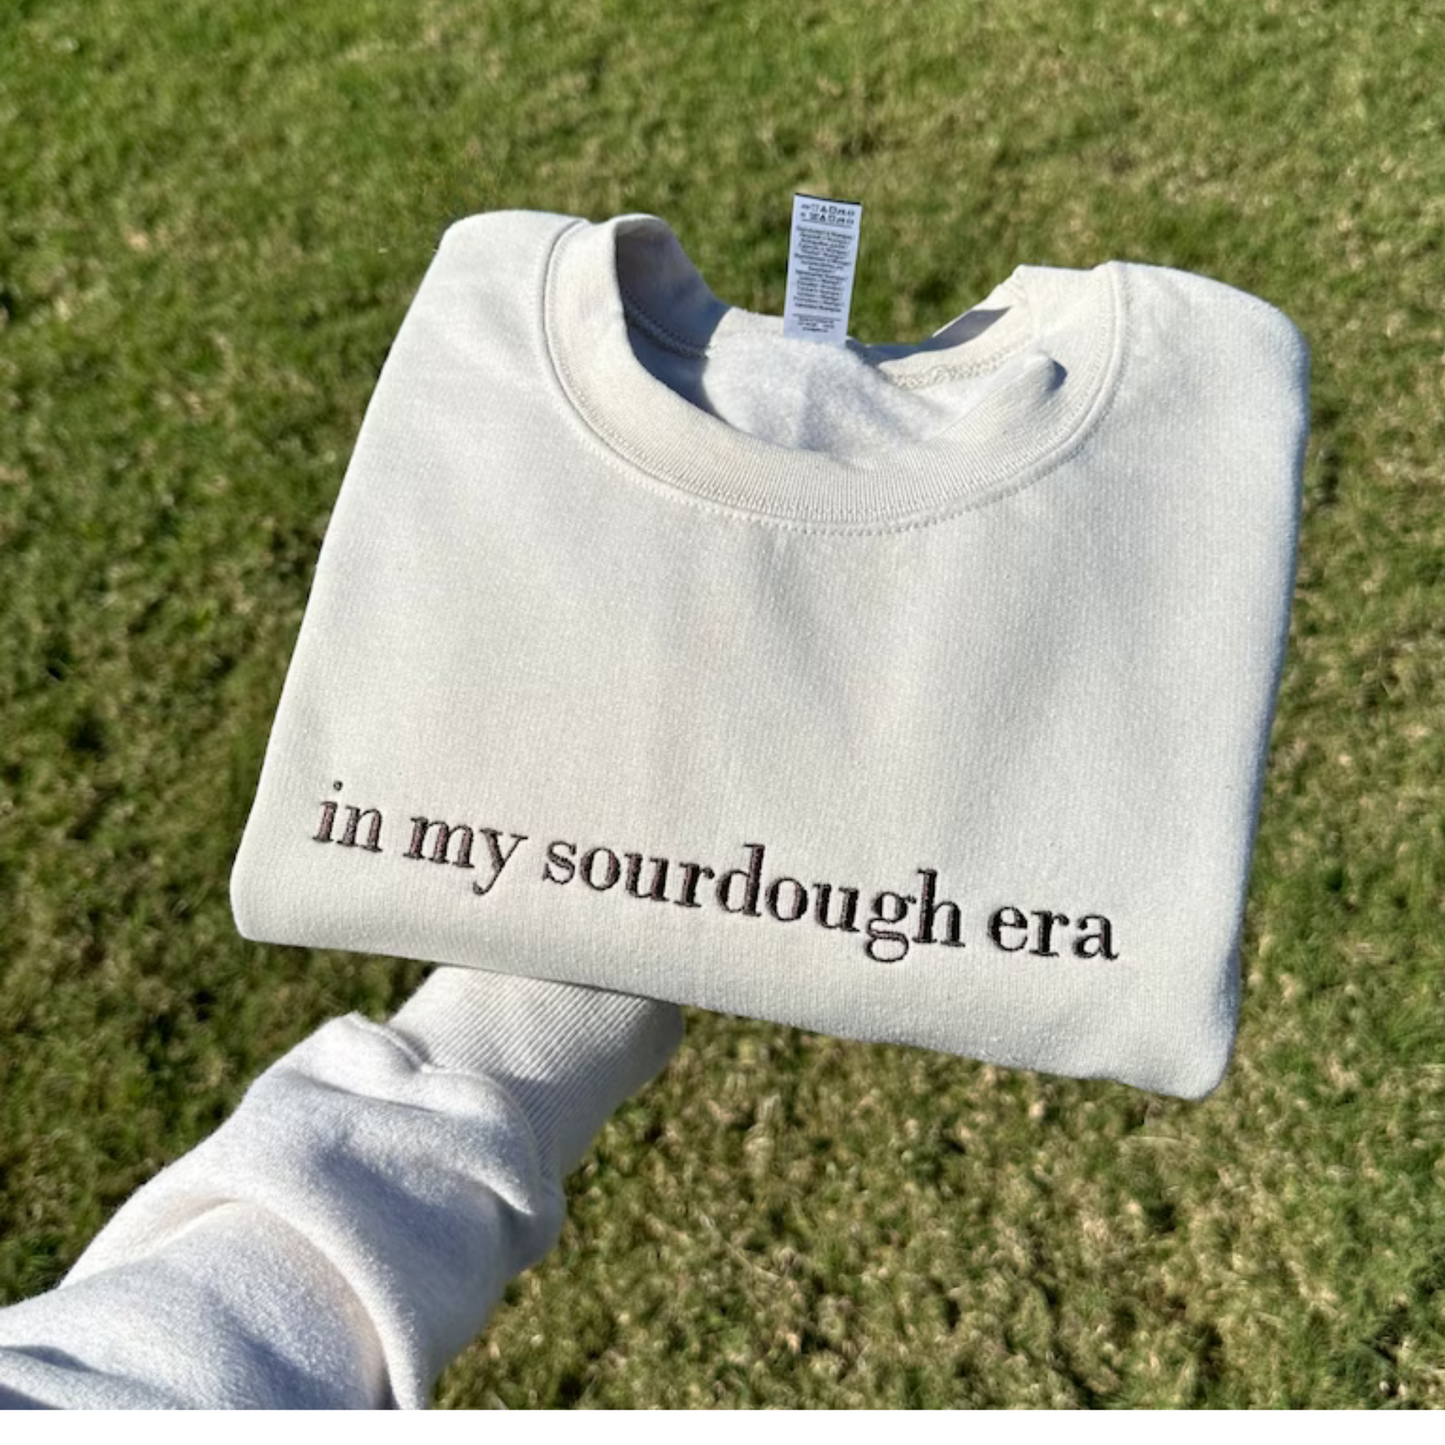 In My Sourdough Era Embroidered Sweatshirt